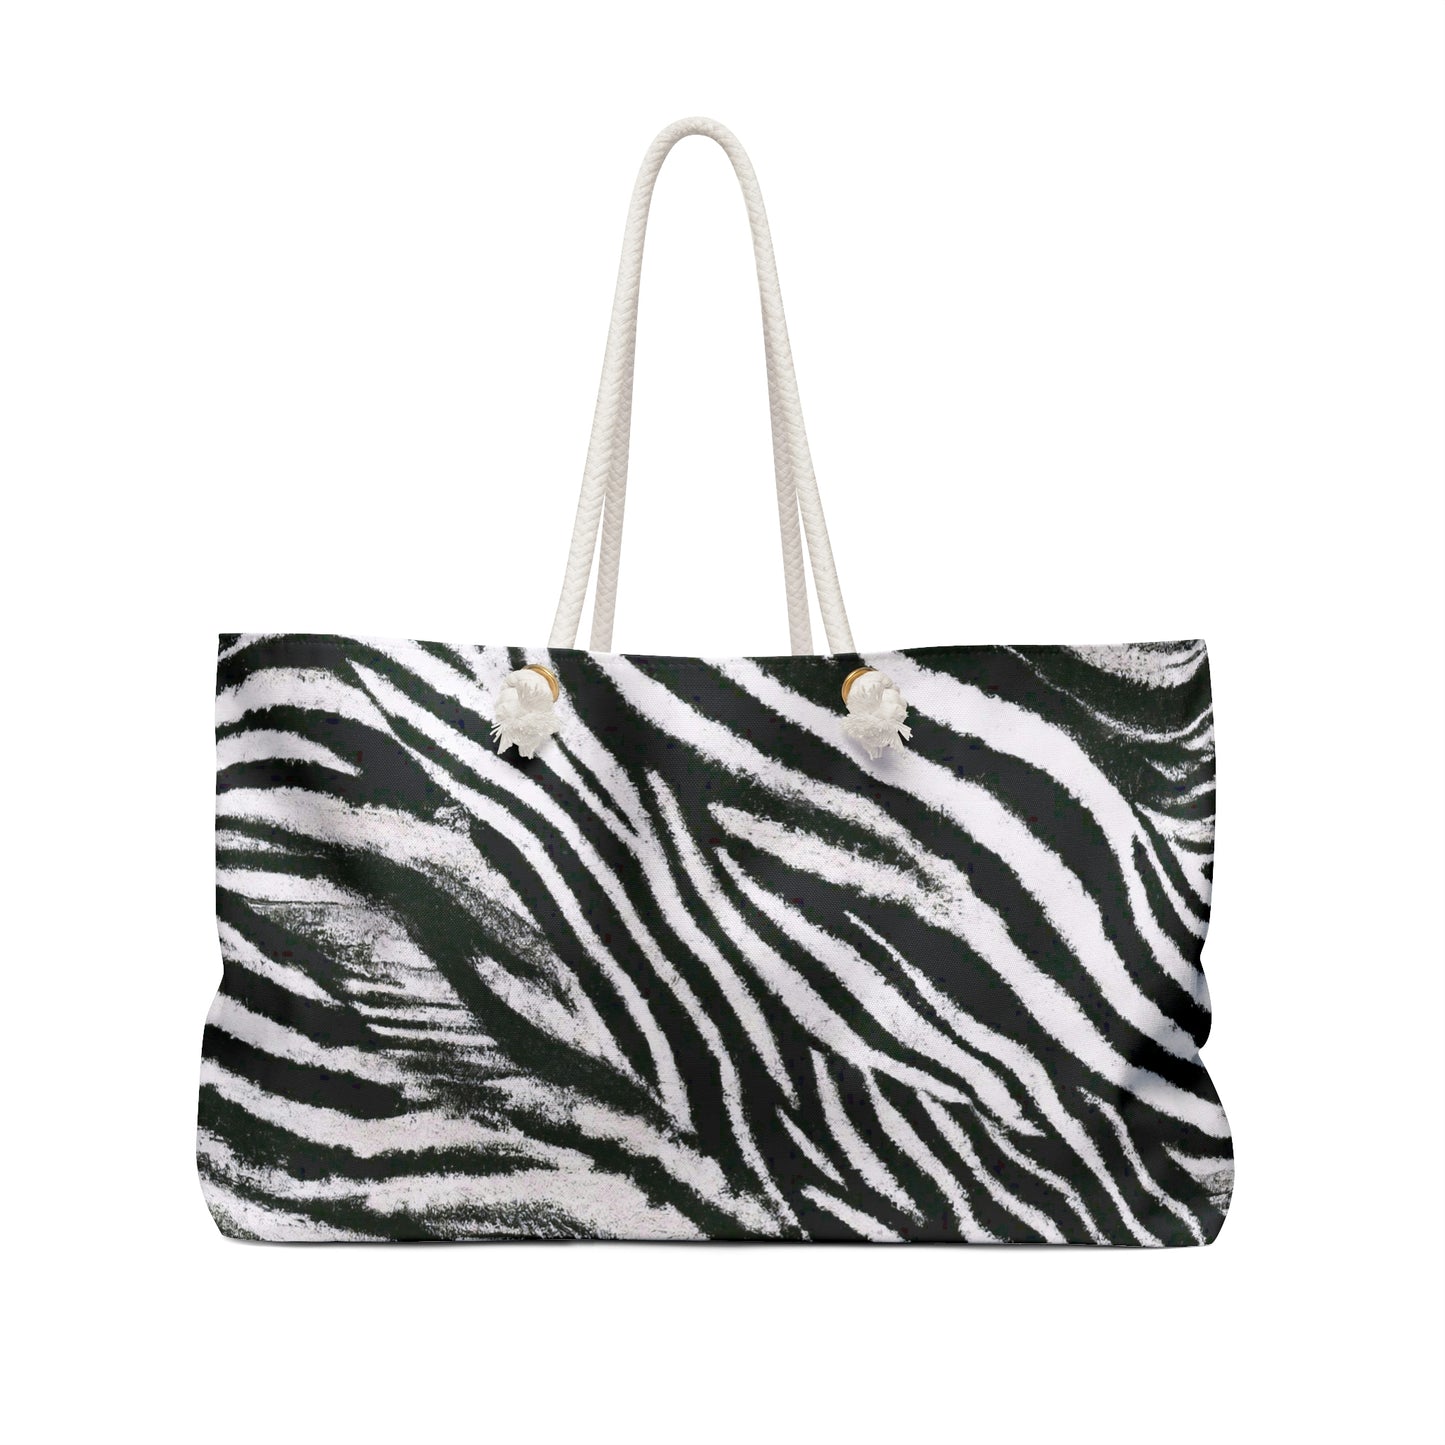 Vampire Art Beach Bag Weekender Bag - Grunge Zebra